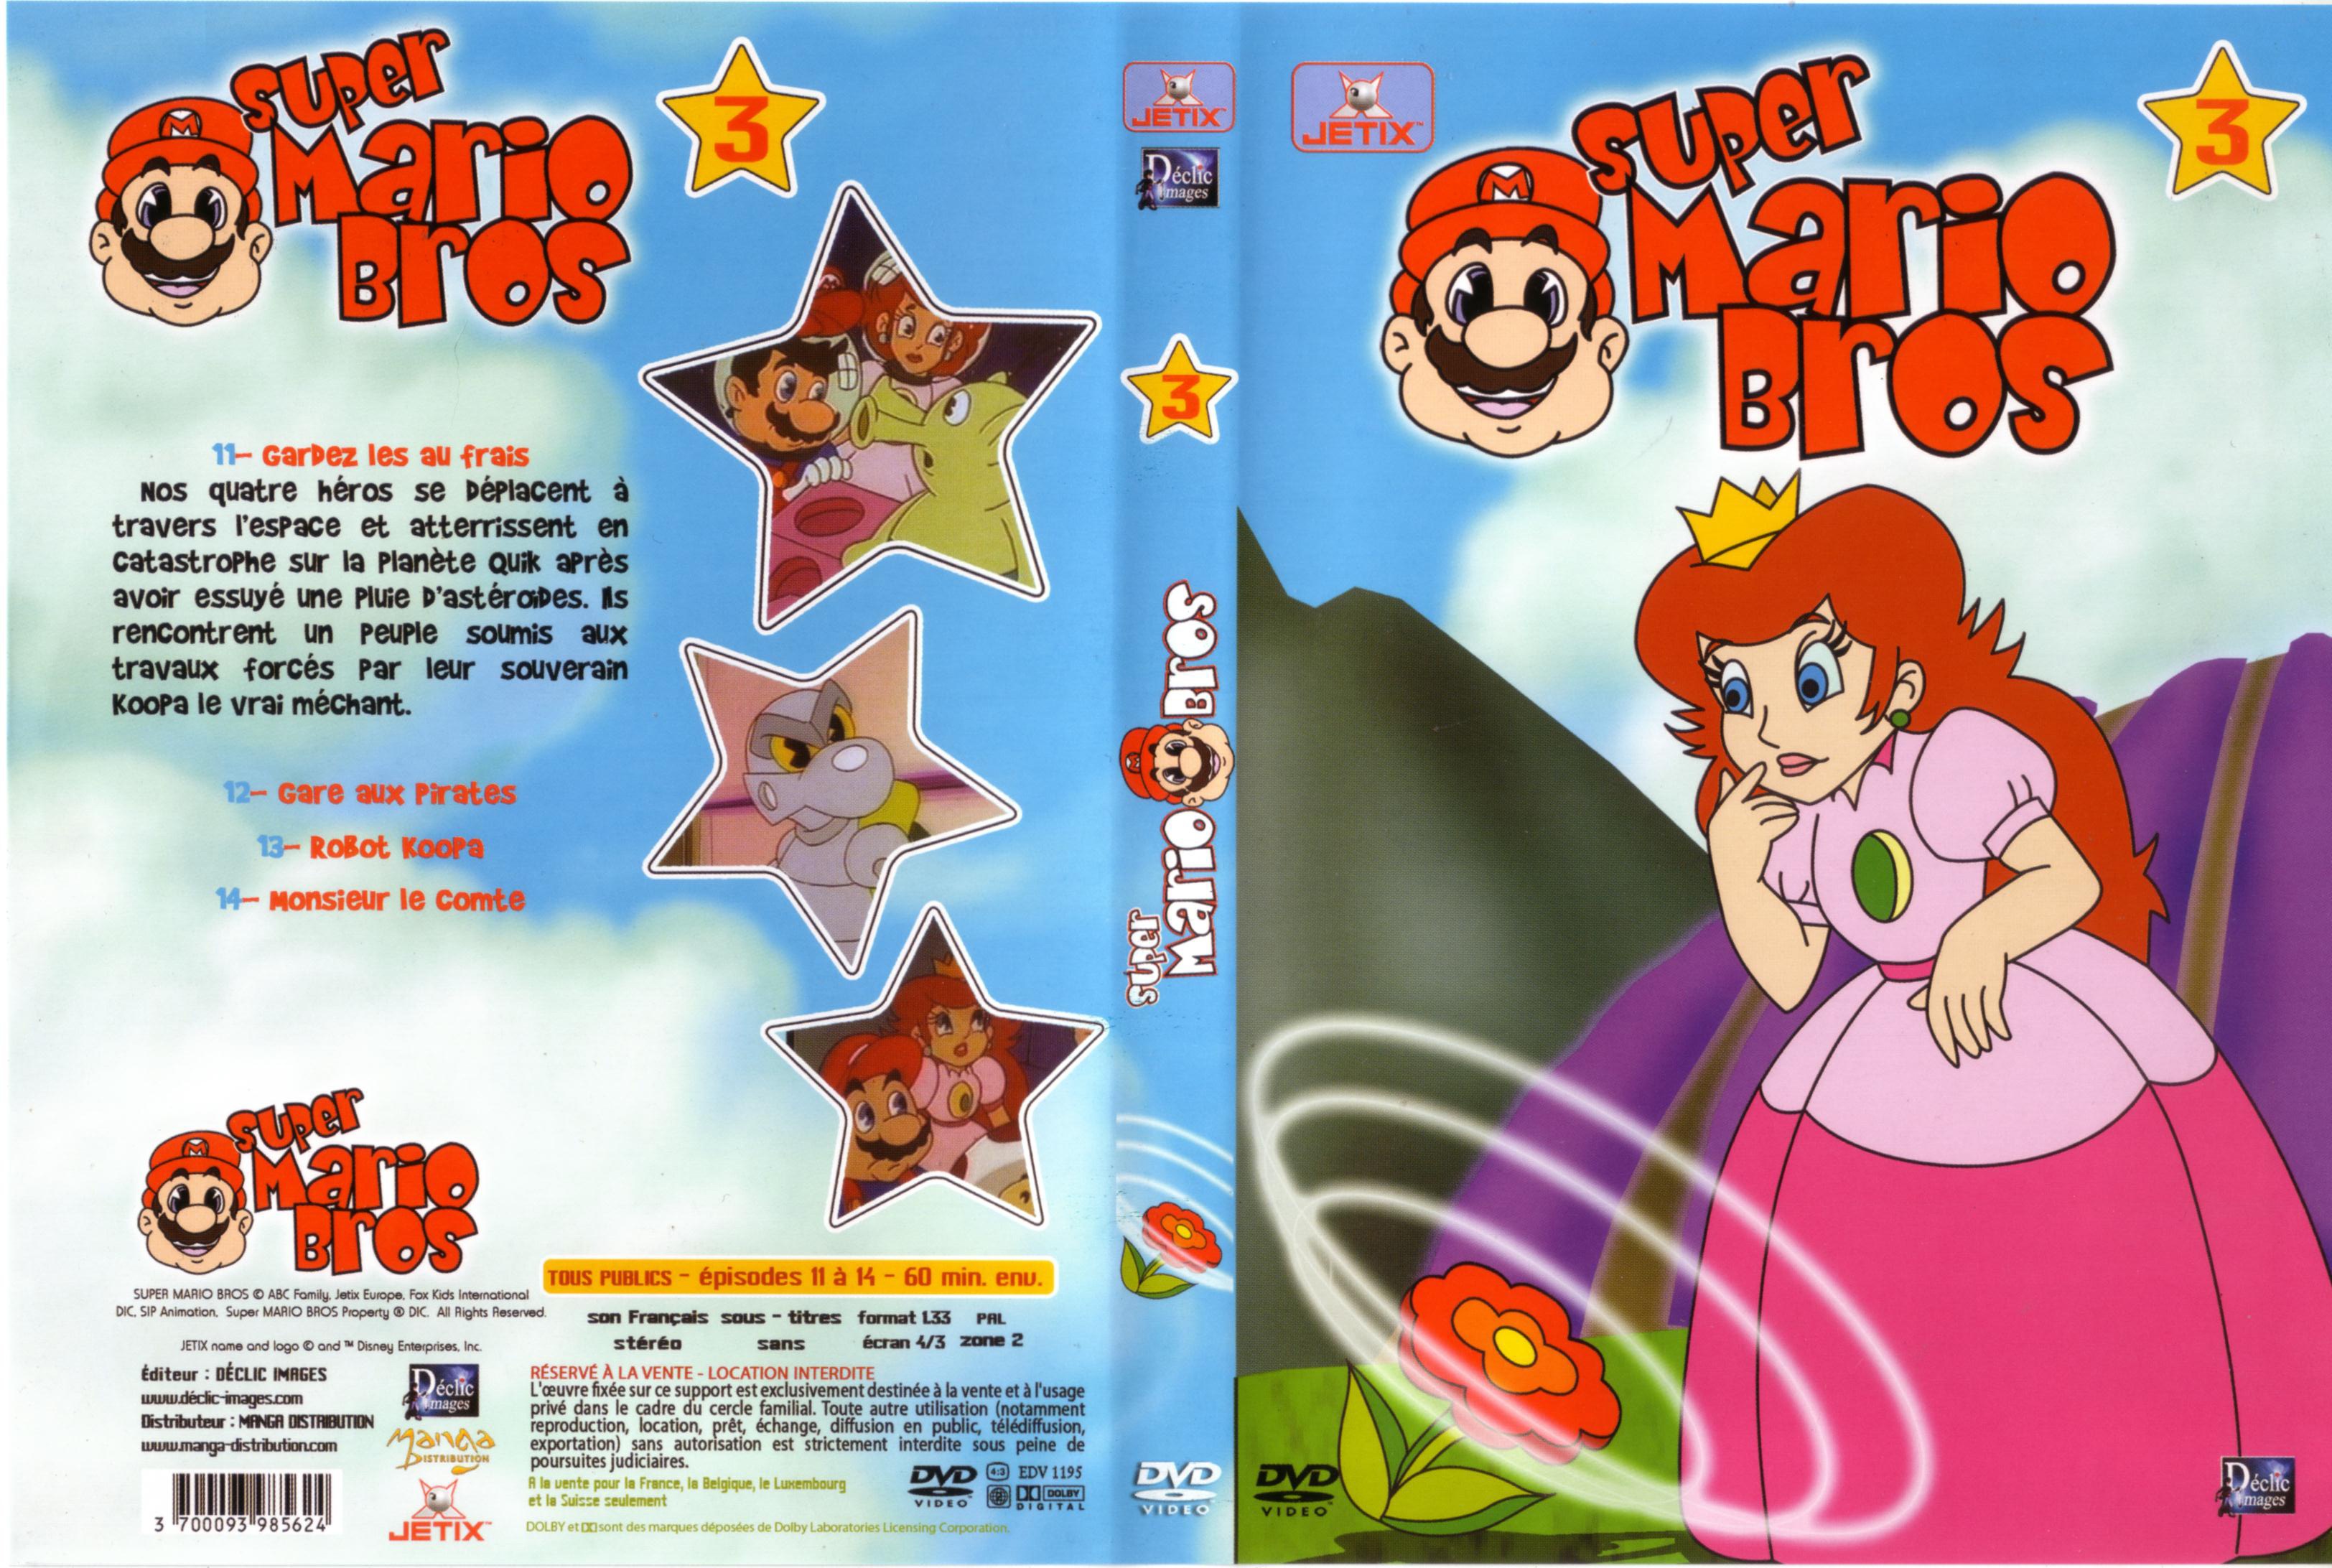 Jaquette DVD Super Mario Bros vol 3